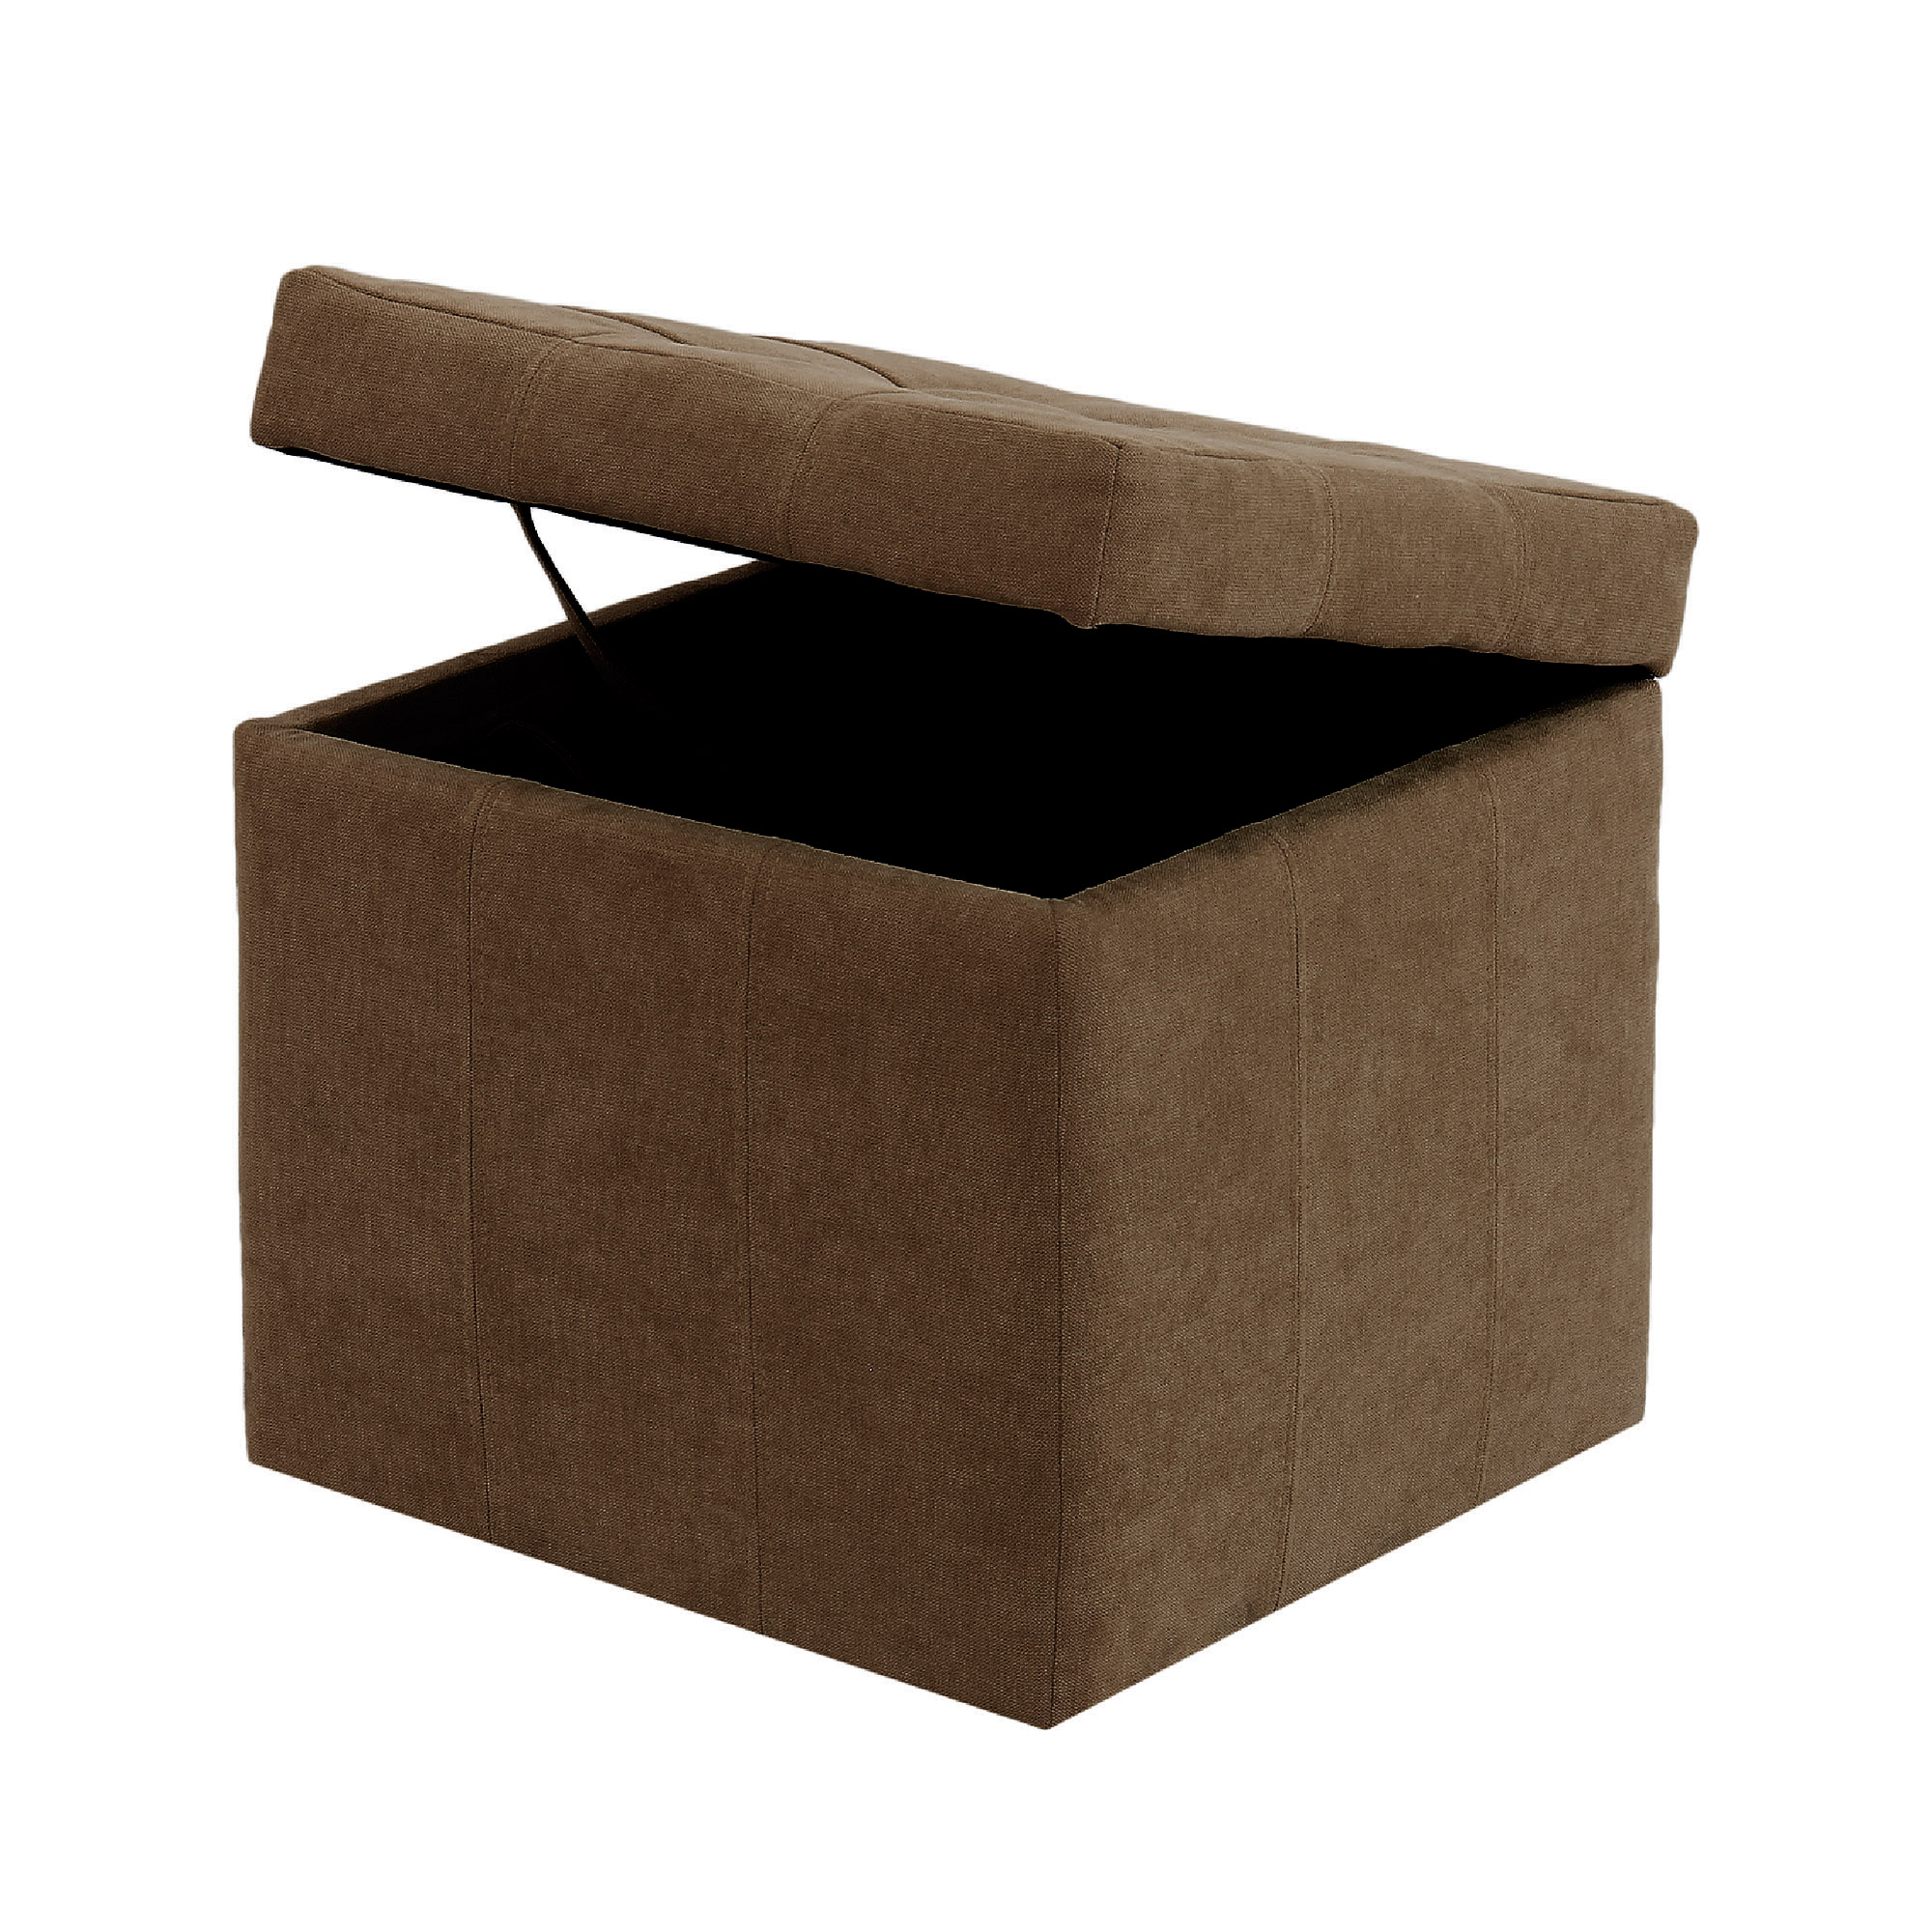 Банкетка Dreambag модерна коричневый велюр 46х46х46 см, размер 46х46х46 см - фото 3